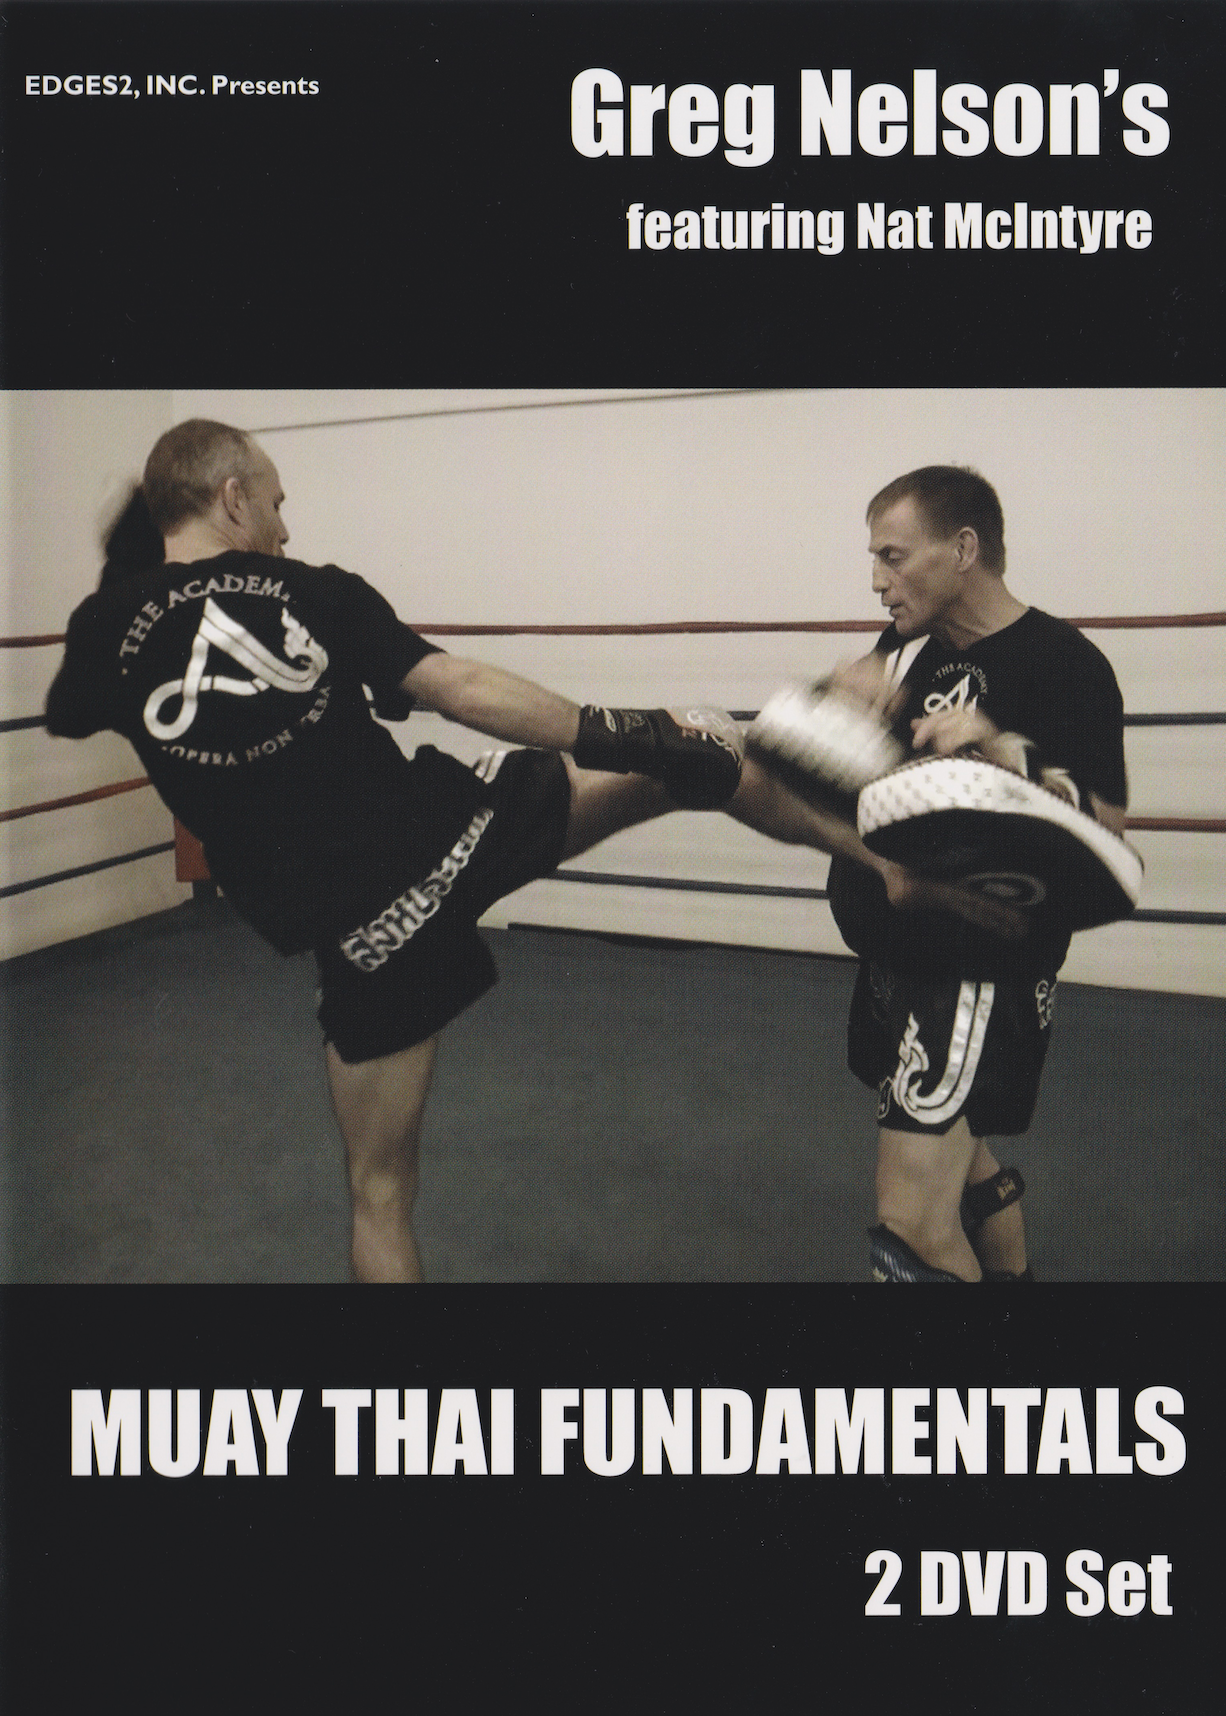 Muay Thai Fundamentals 2 DVD Set by Greg Nelson